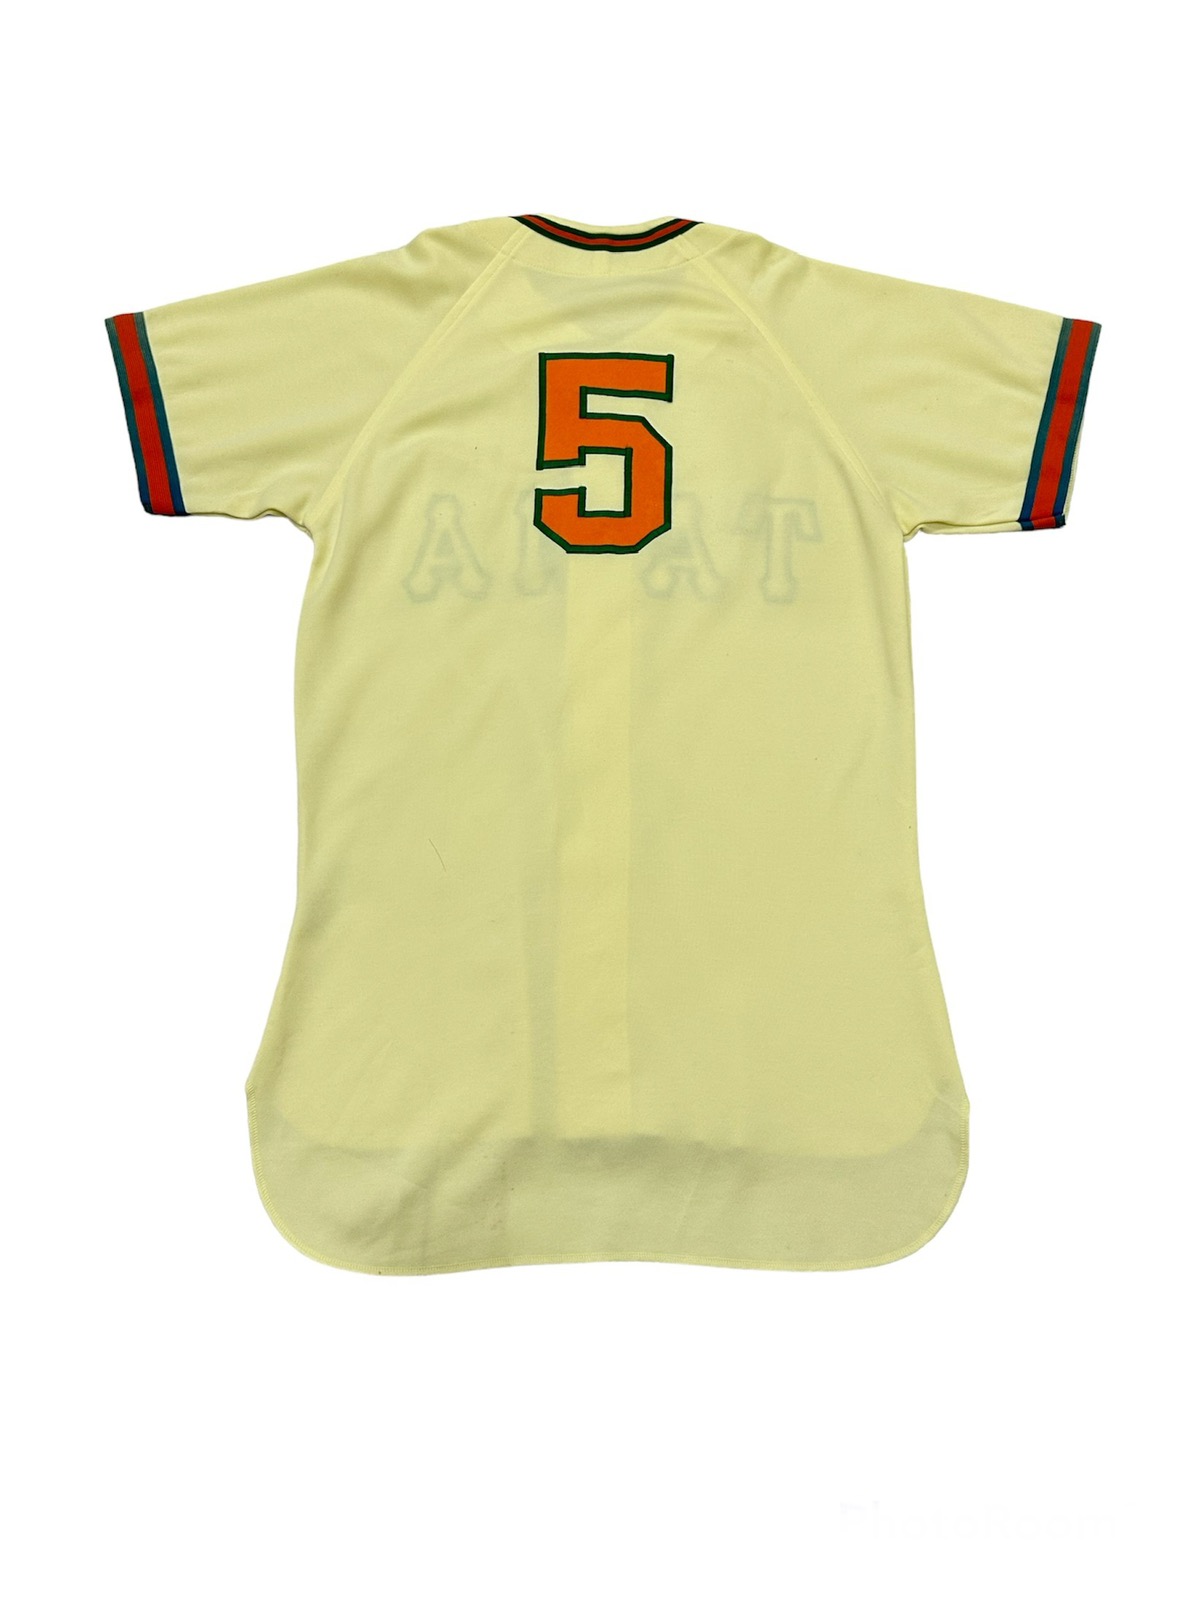 Vintage - Vintage TAMA Baseball Jersey - 2